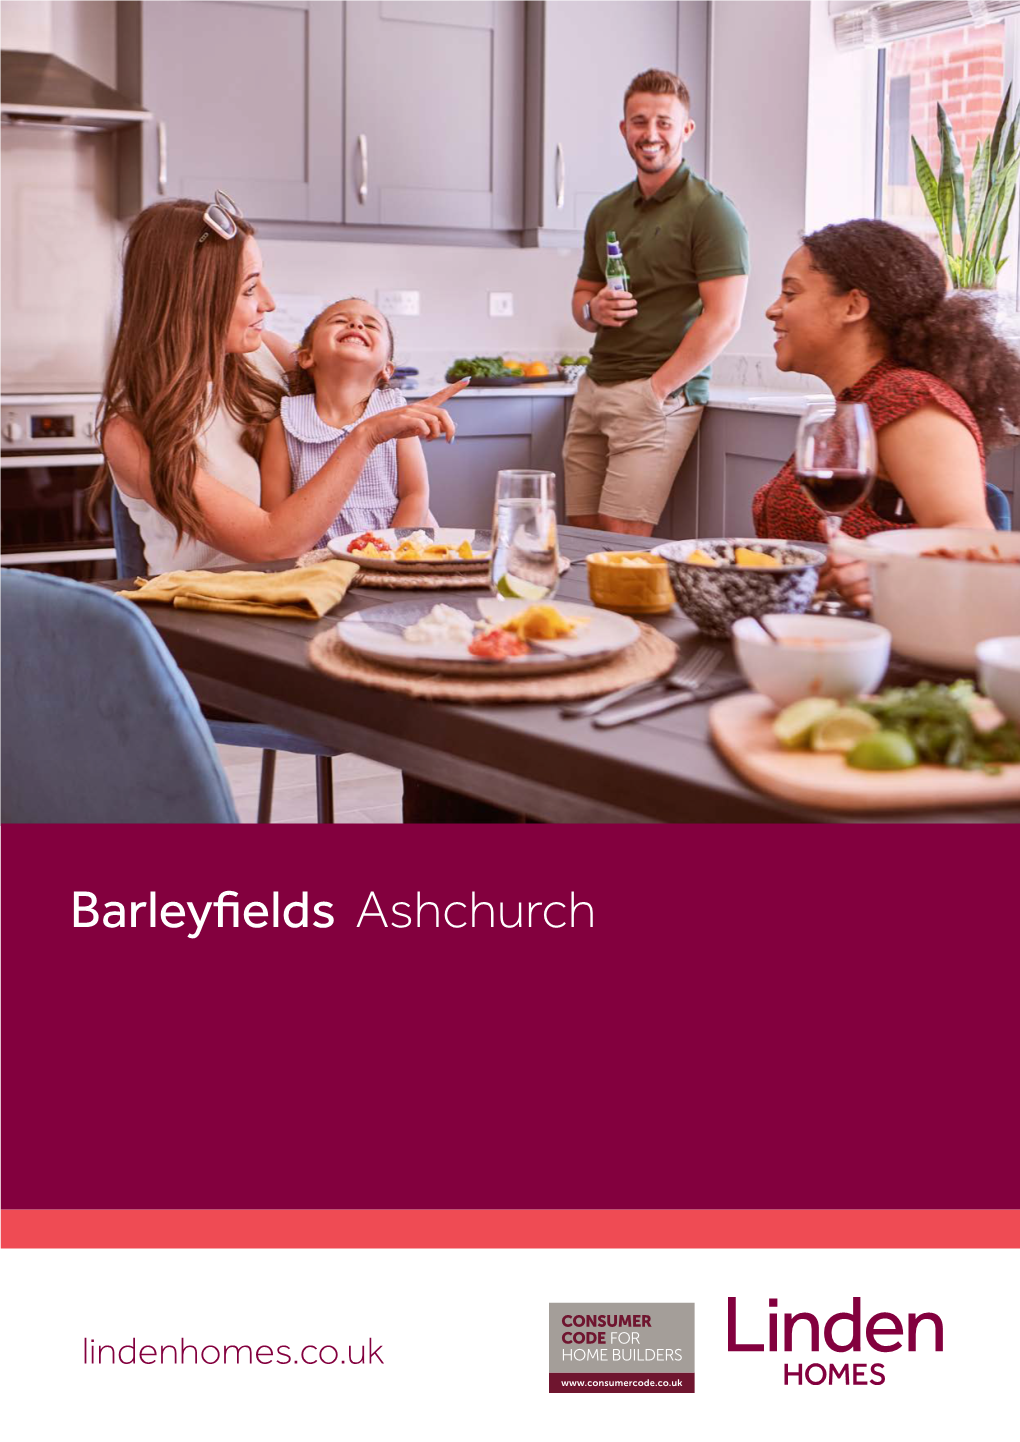 Barleyfields Ashchurch